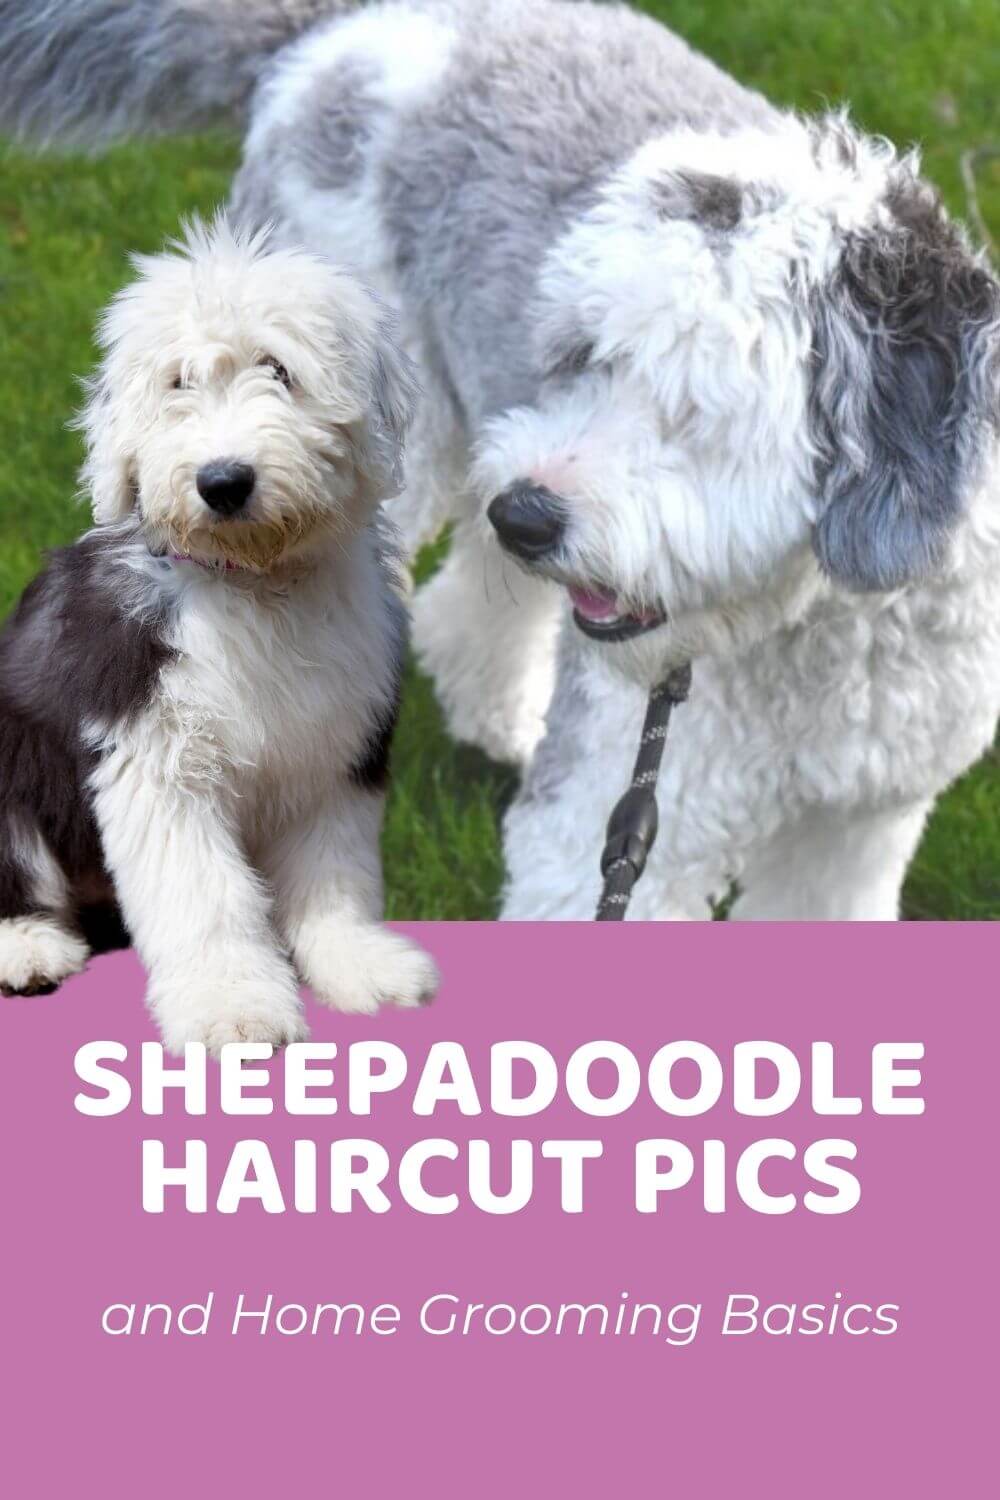 Sheepadoodle Grooming Haircut Pics and Home Grooming Basics